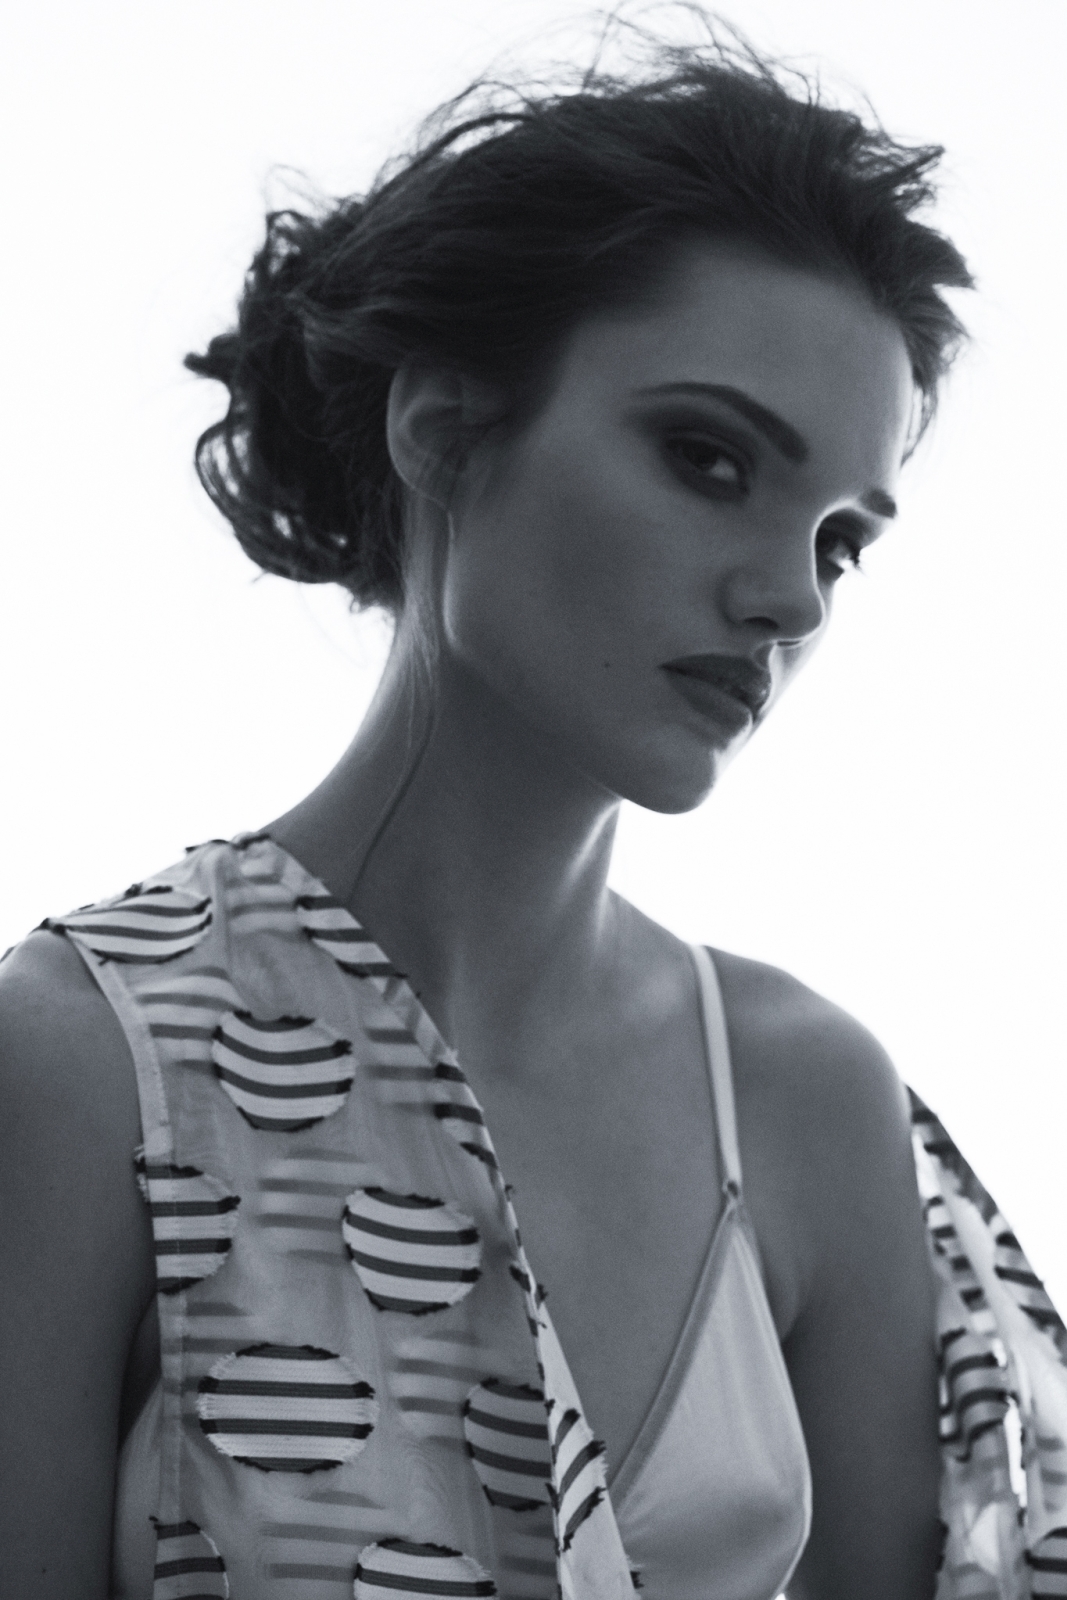 Model: Kinga Trojan / D'vision | Stylist: Ewa Michalik | MUA: Vika May | Hair: Patryk Nadolny